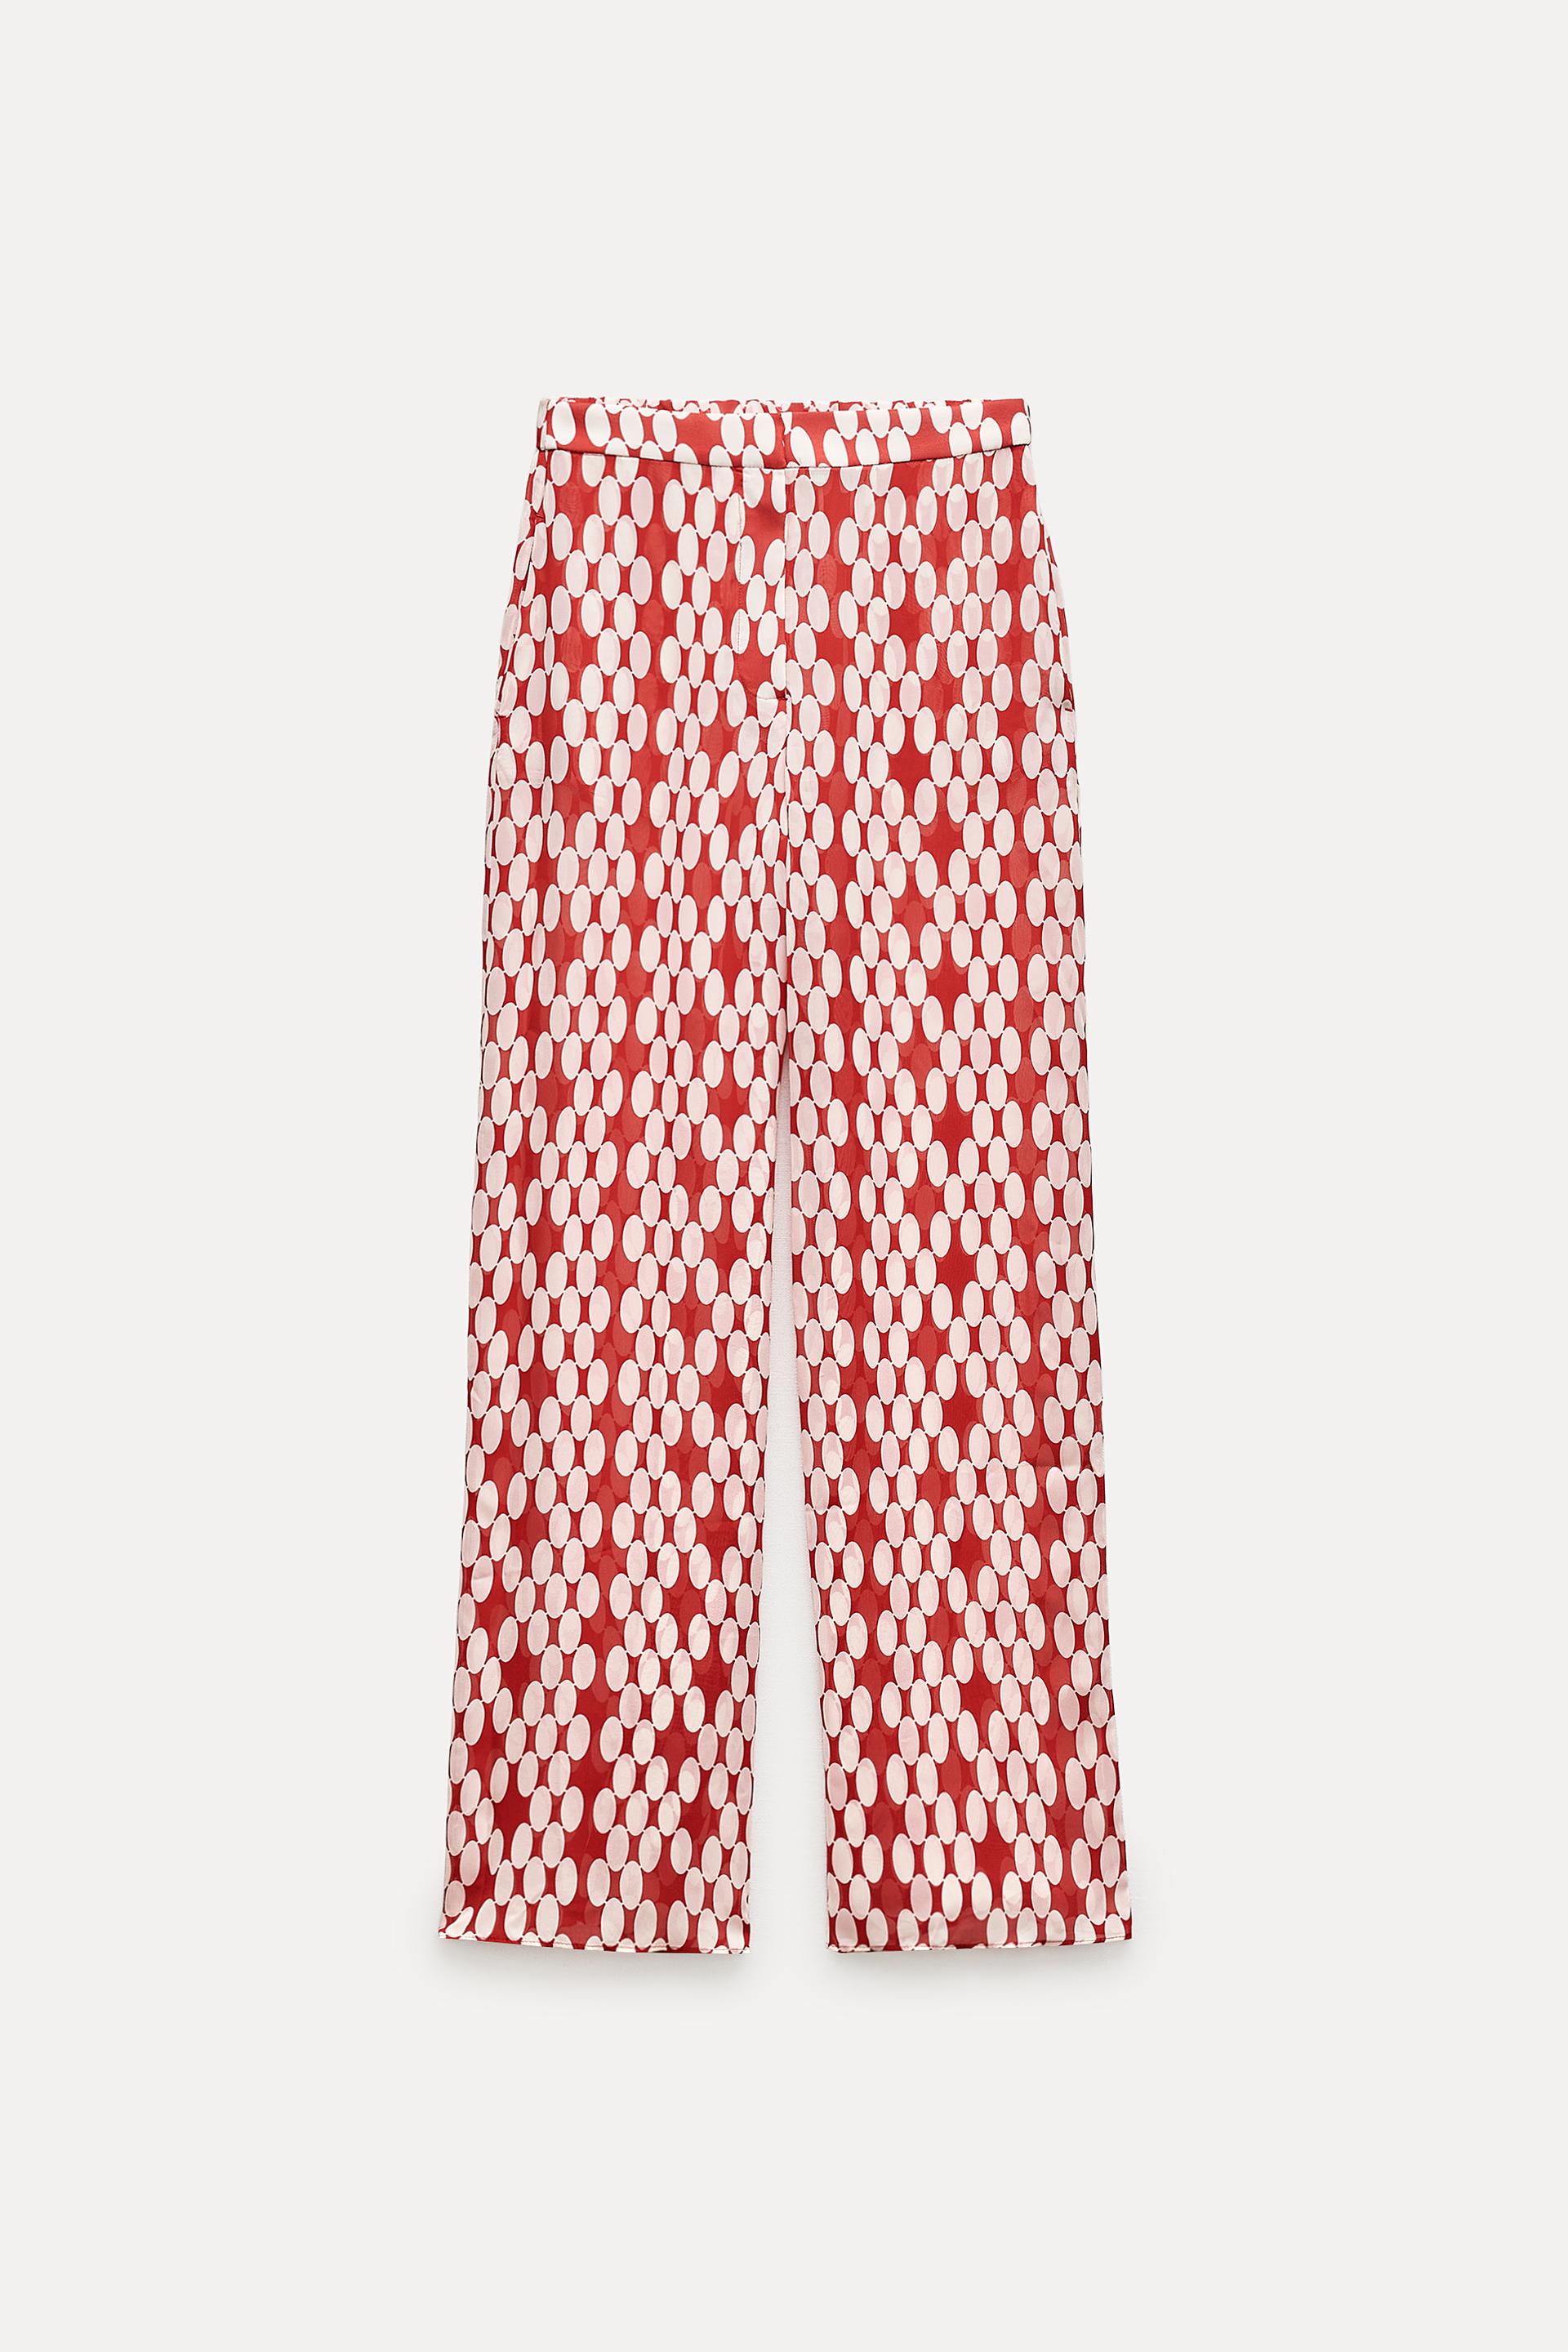 Брюки Zara ZW Collection Printed Flowing, белый/красный брюки zara zw collection printed светло синий